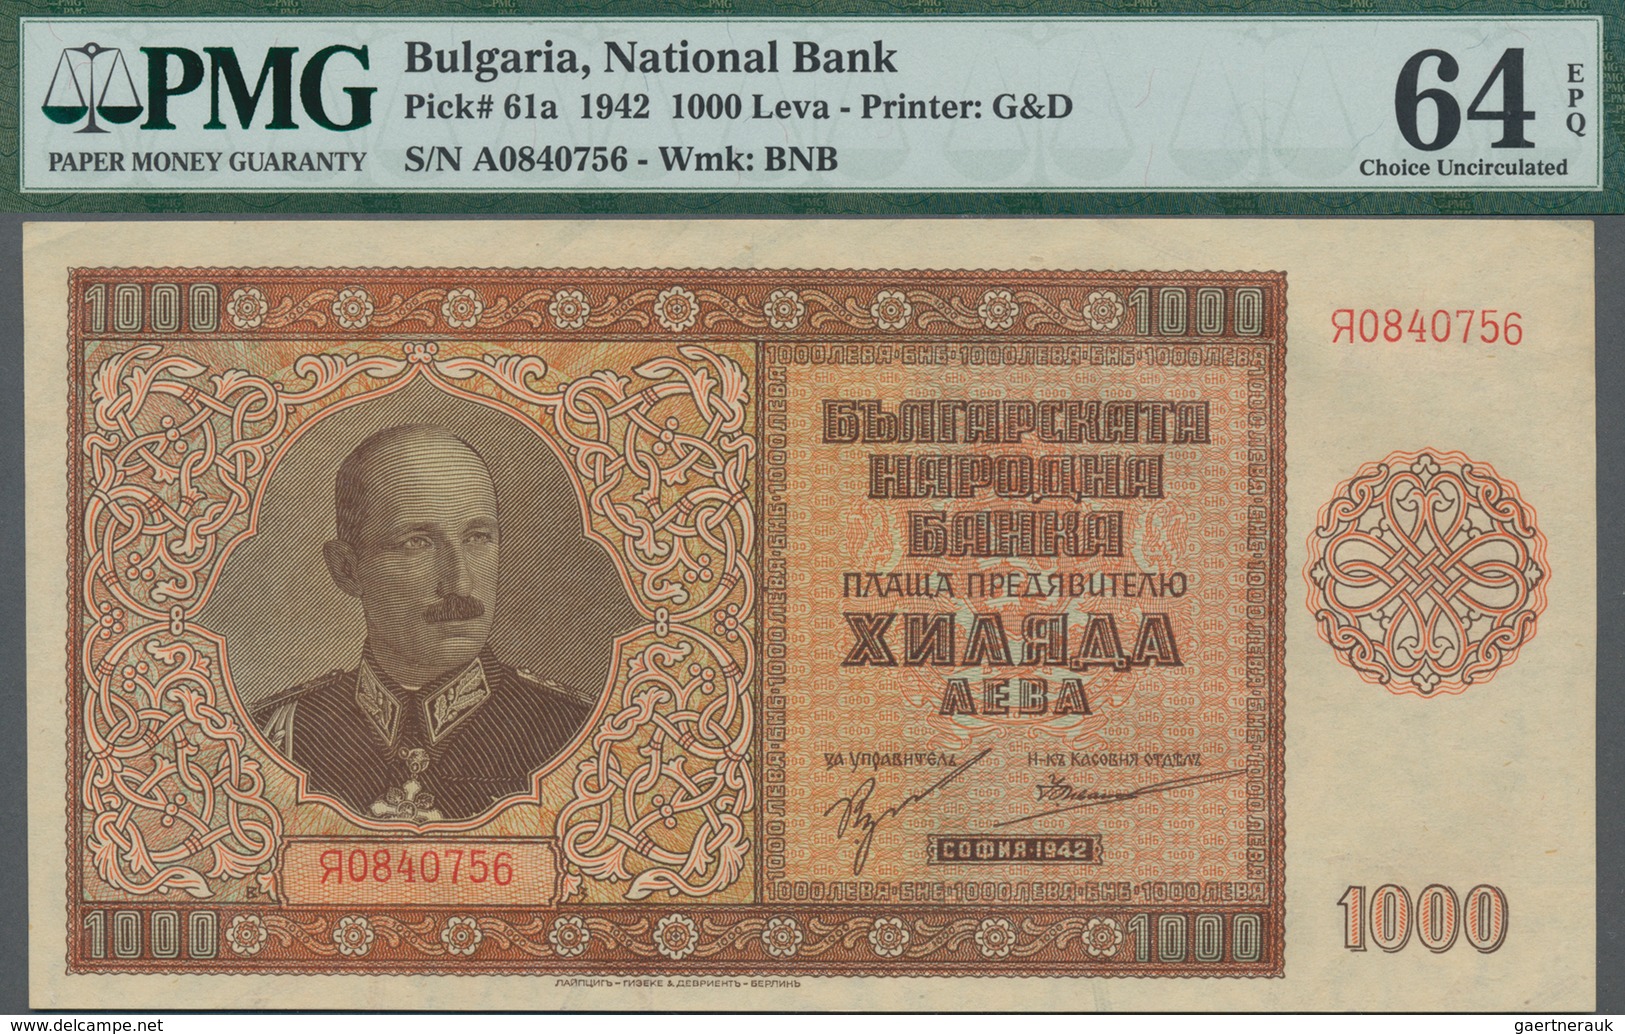 Bulgaria / Bulgarien: National Bank Of Bulgaria 1000 Leva 1942, P.61a, PMG Graded 64 Choice Uncircul - Bulgarien